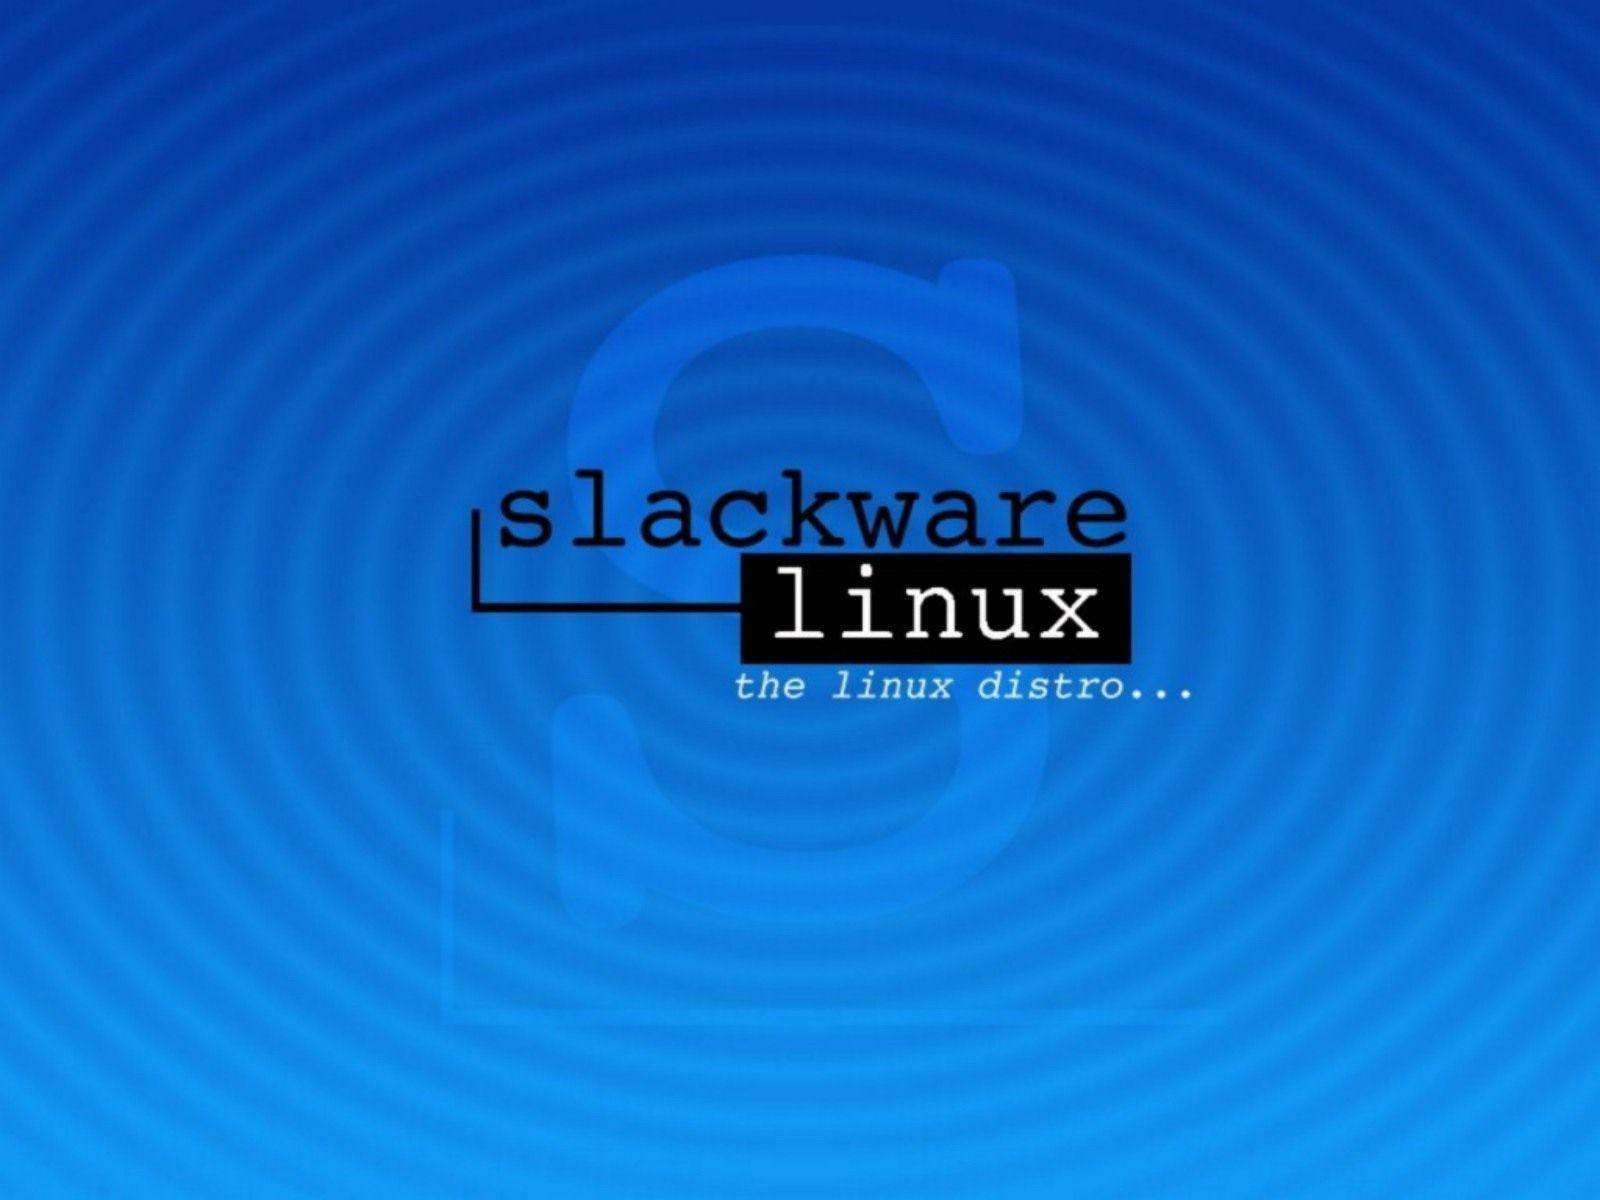 Slackware Wallpaper